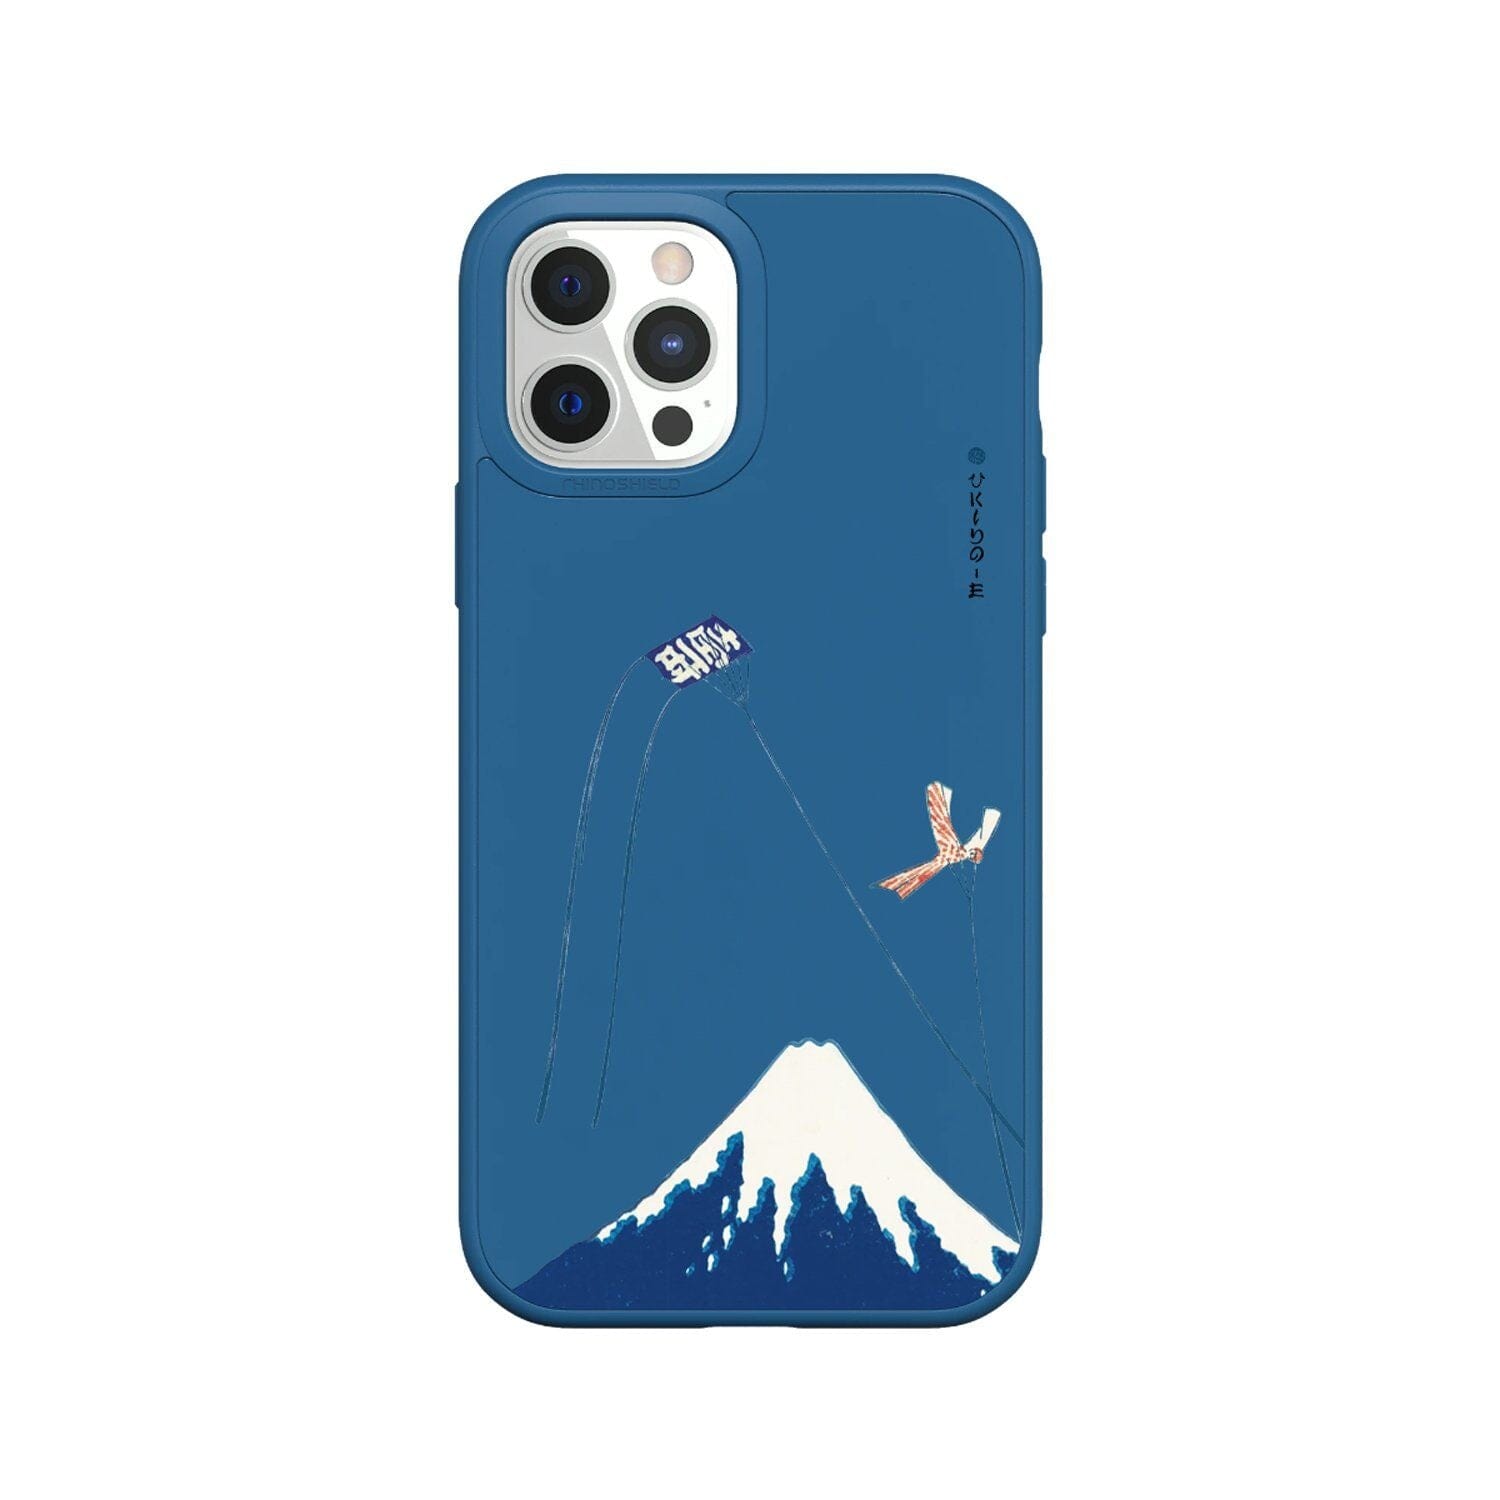 RhinoShield SolidSuit Design Case for iPhone 12 Series (2020) Default RhinoShield iPhone 12 Pro Max 6.7" Royal Blue/Mount Fuji 